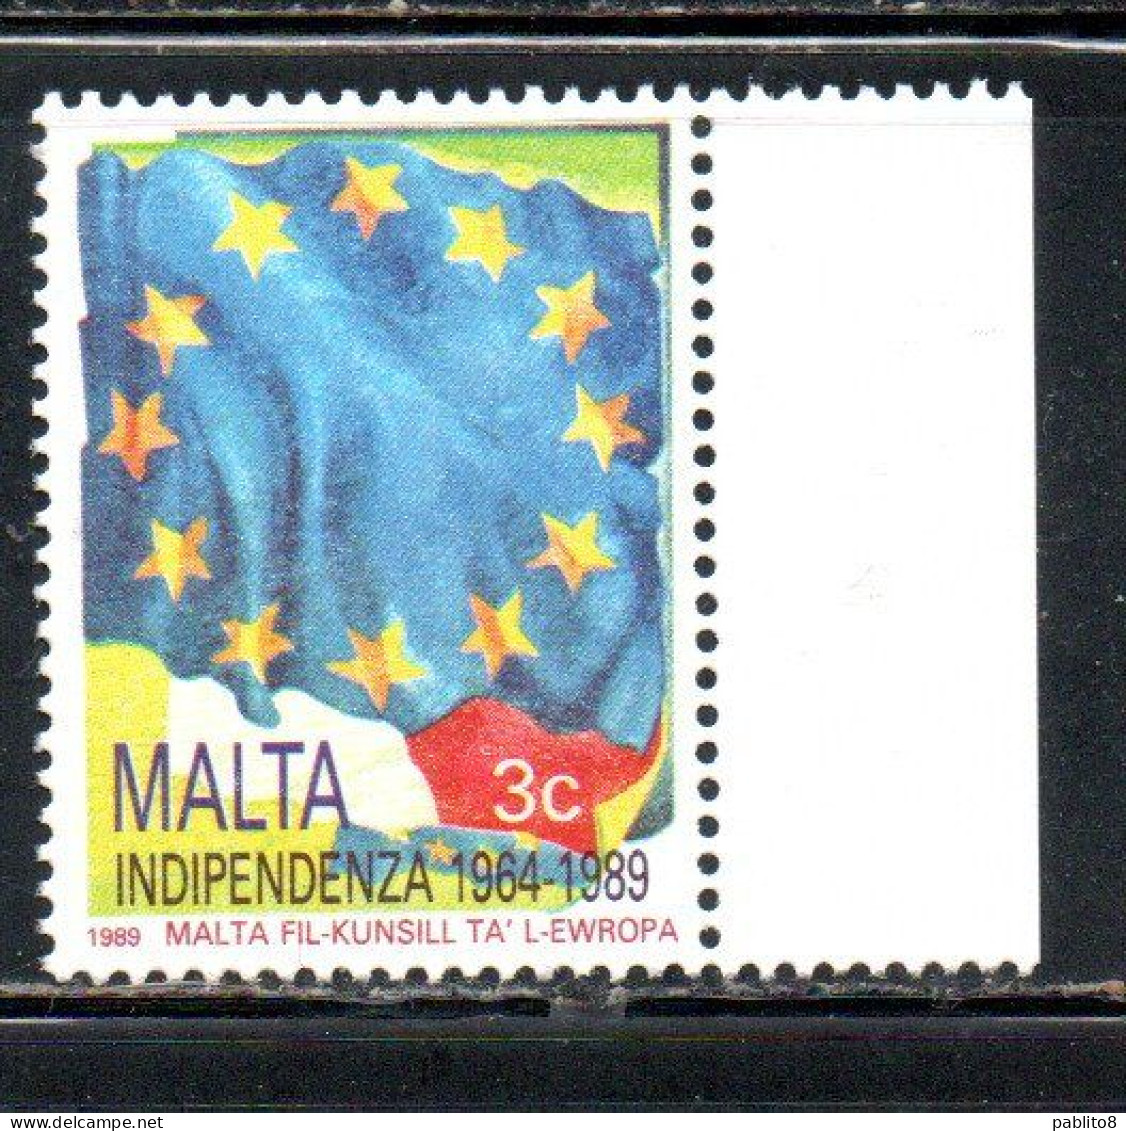 MALTA 1989 INDEPENDENCE INDIPENDENZA 25th ANNIVERSARY 2c MNH - Malte